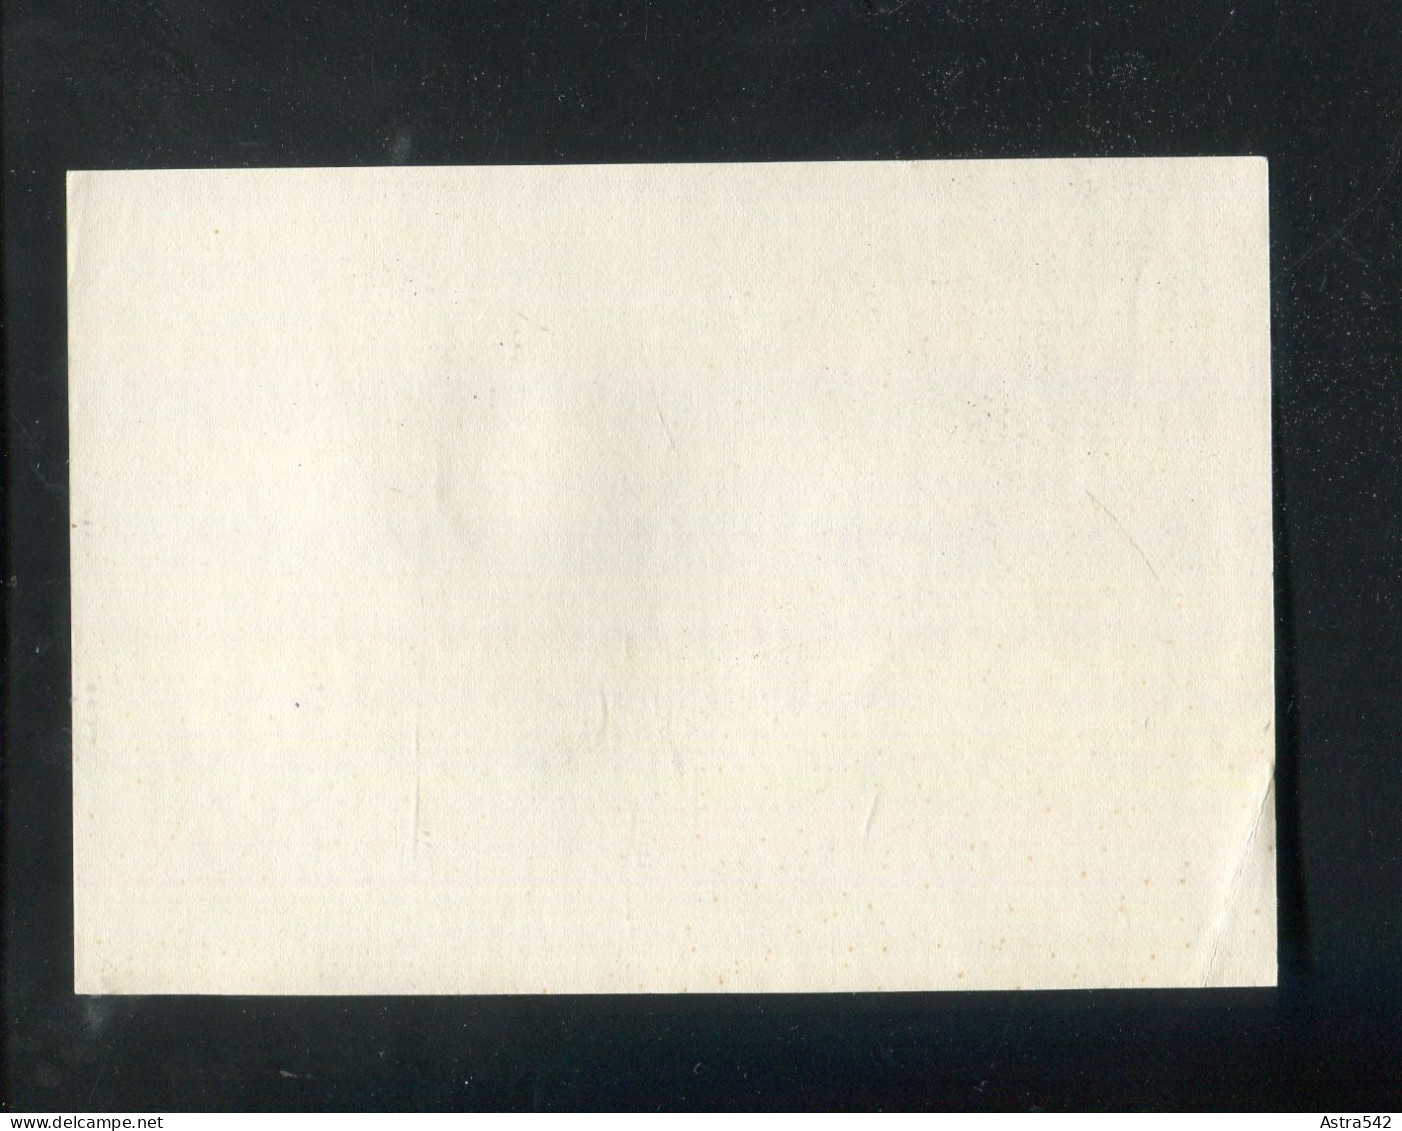 "LEIPZIGER MESSE" 1970, Werbeblatt (Format A6) (A0006) - Pubblicitari